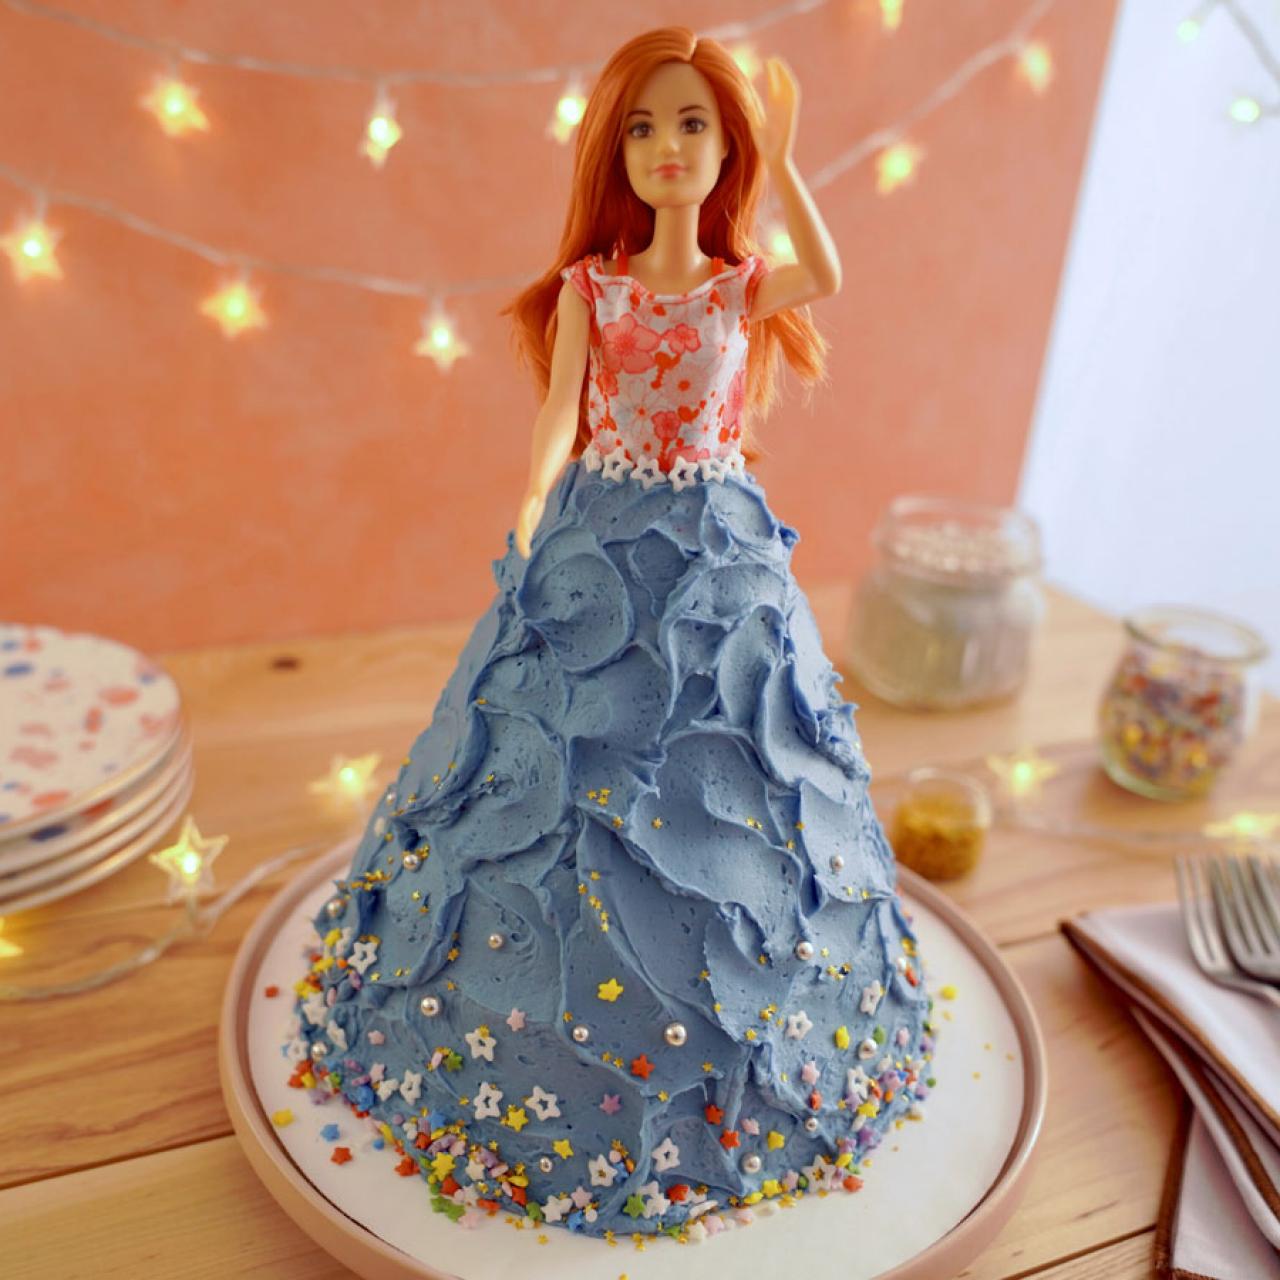 Long Live the Barbie Birthday Cake - Paste Magazine